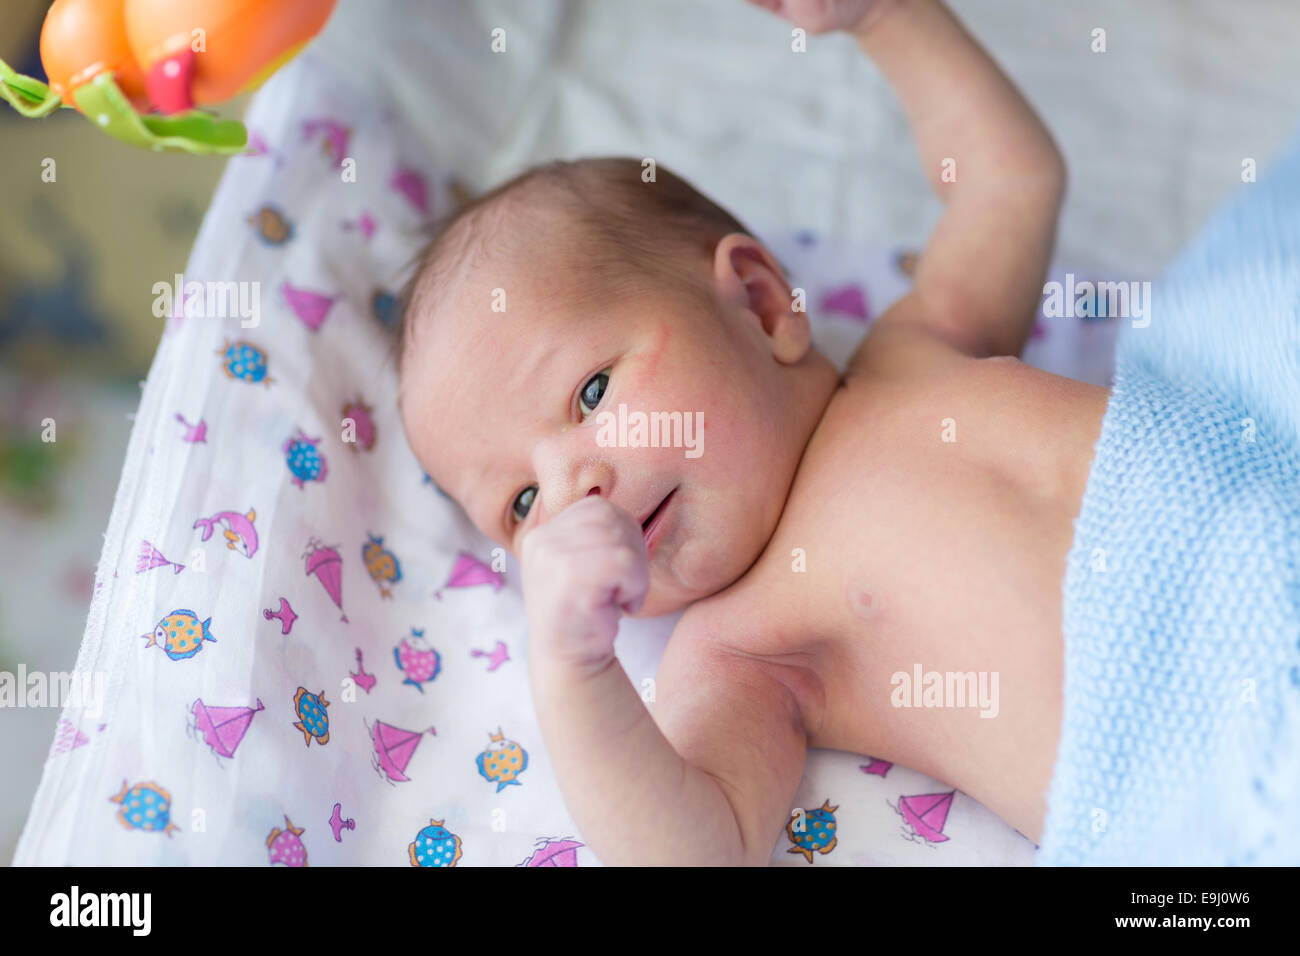 Newborn baby, 3 days old at home Stock Photo